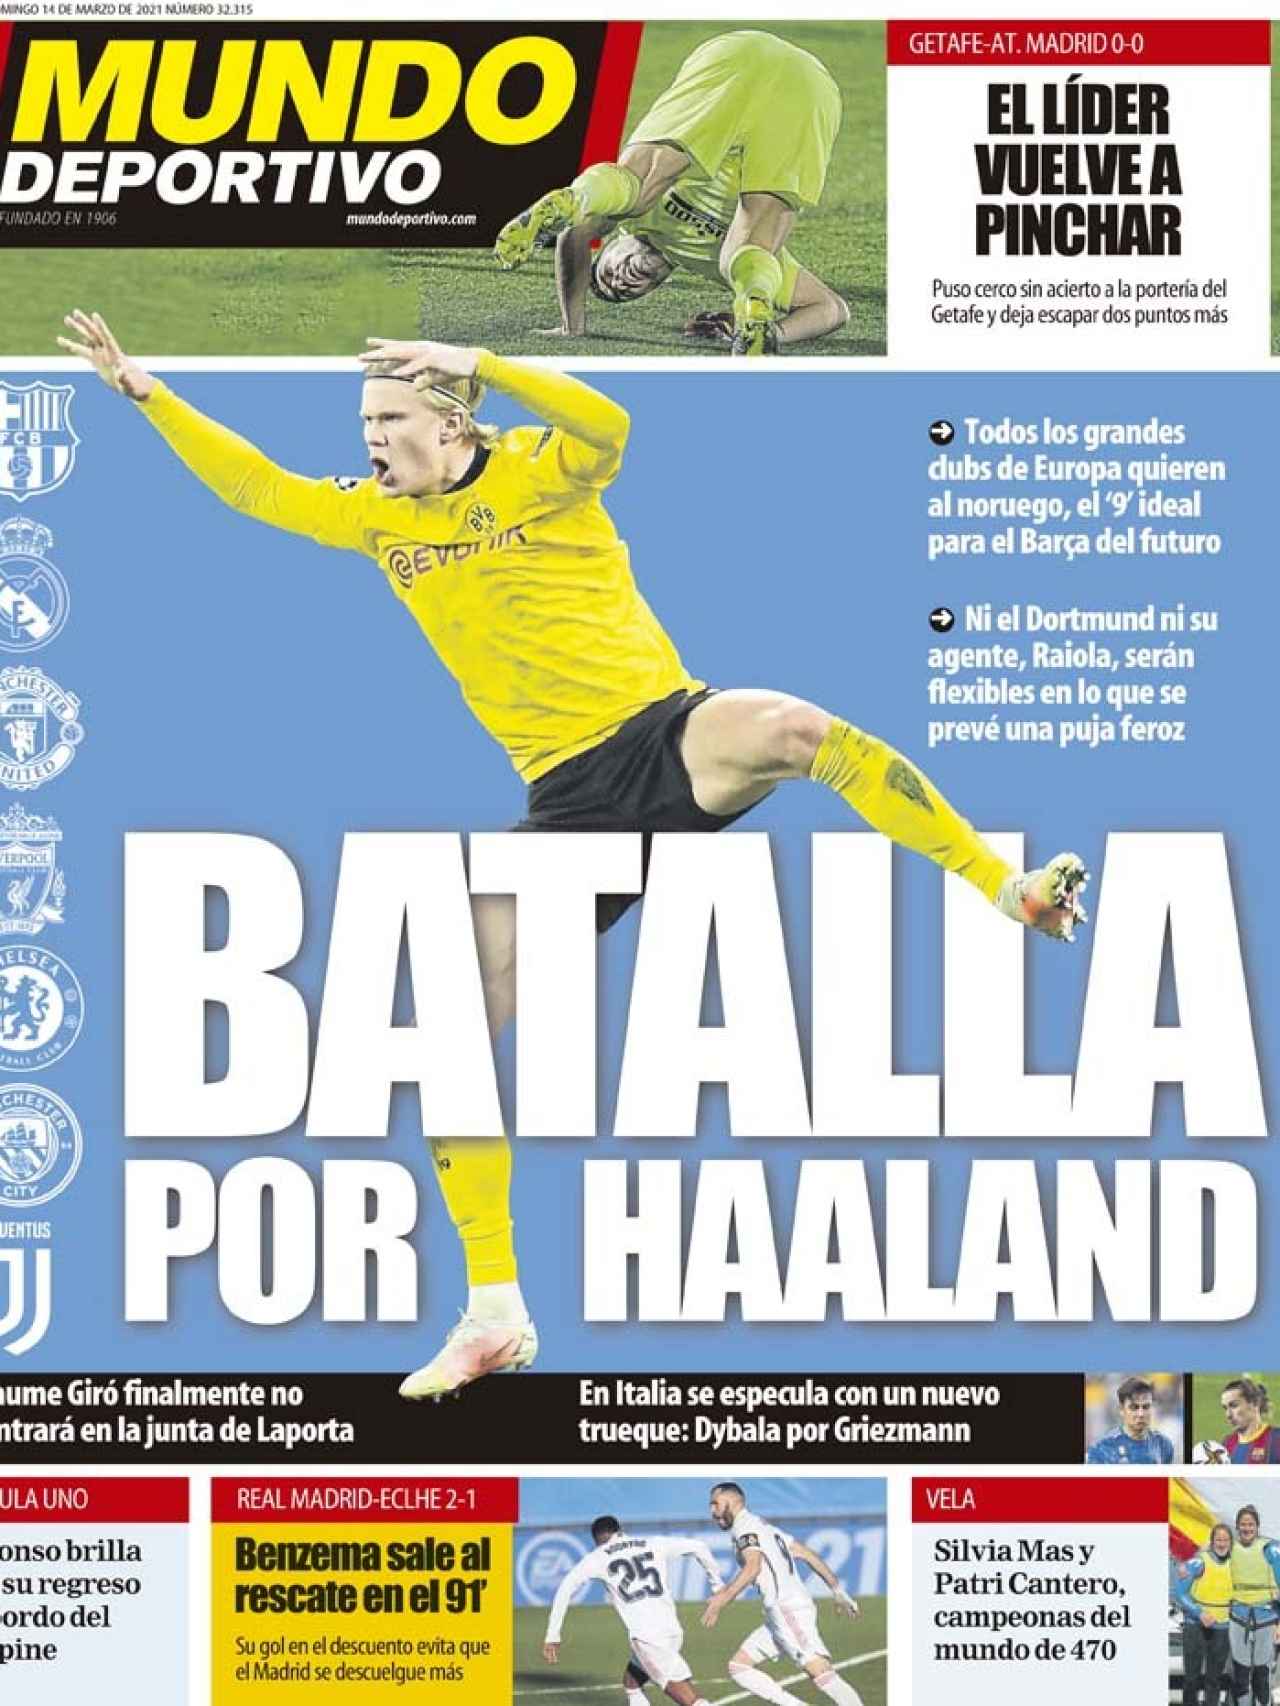 La porta del diario Mundo Deportivo